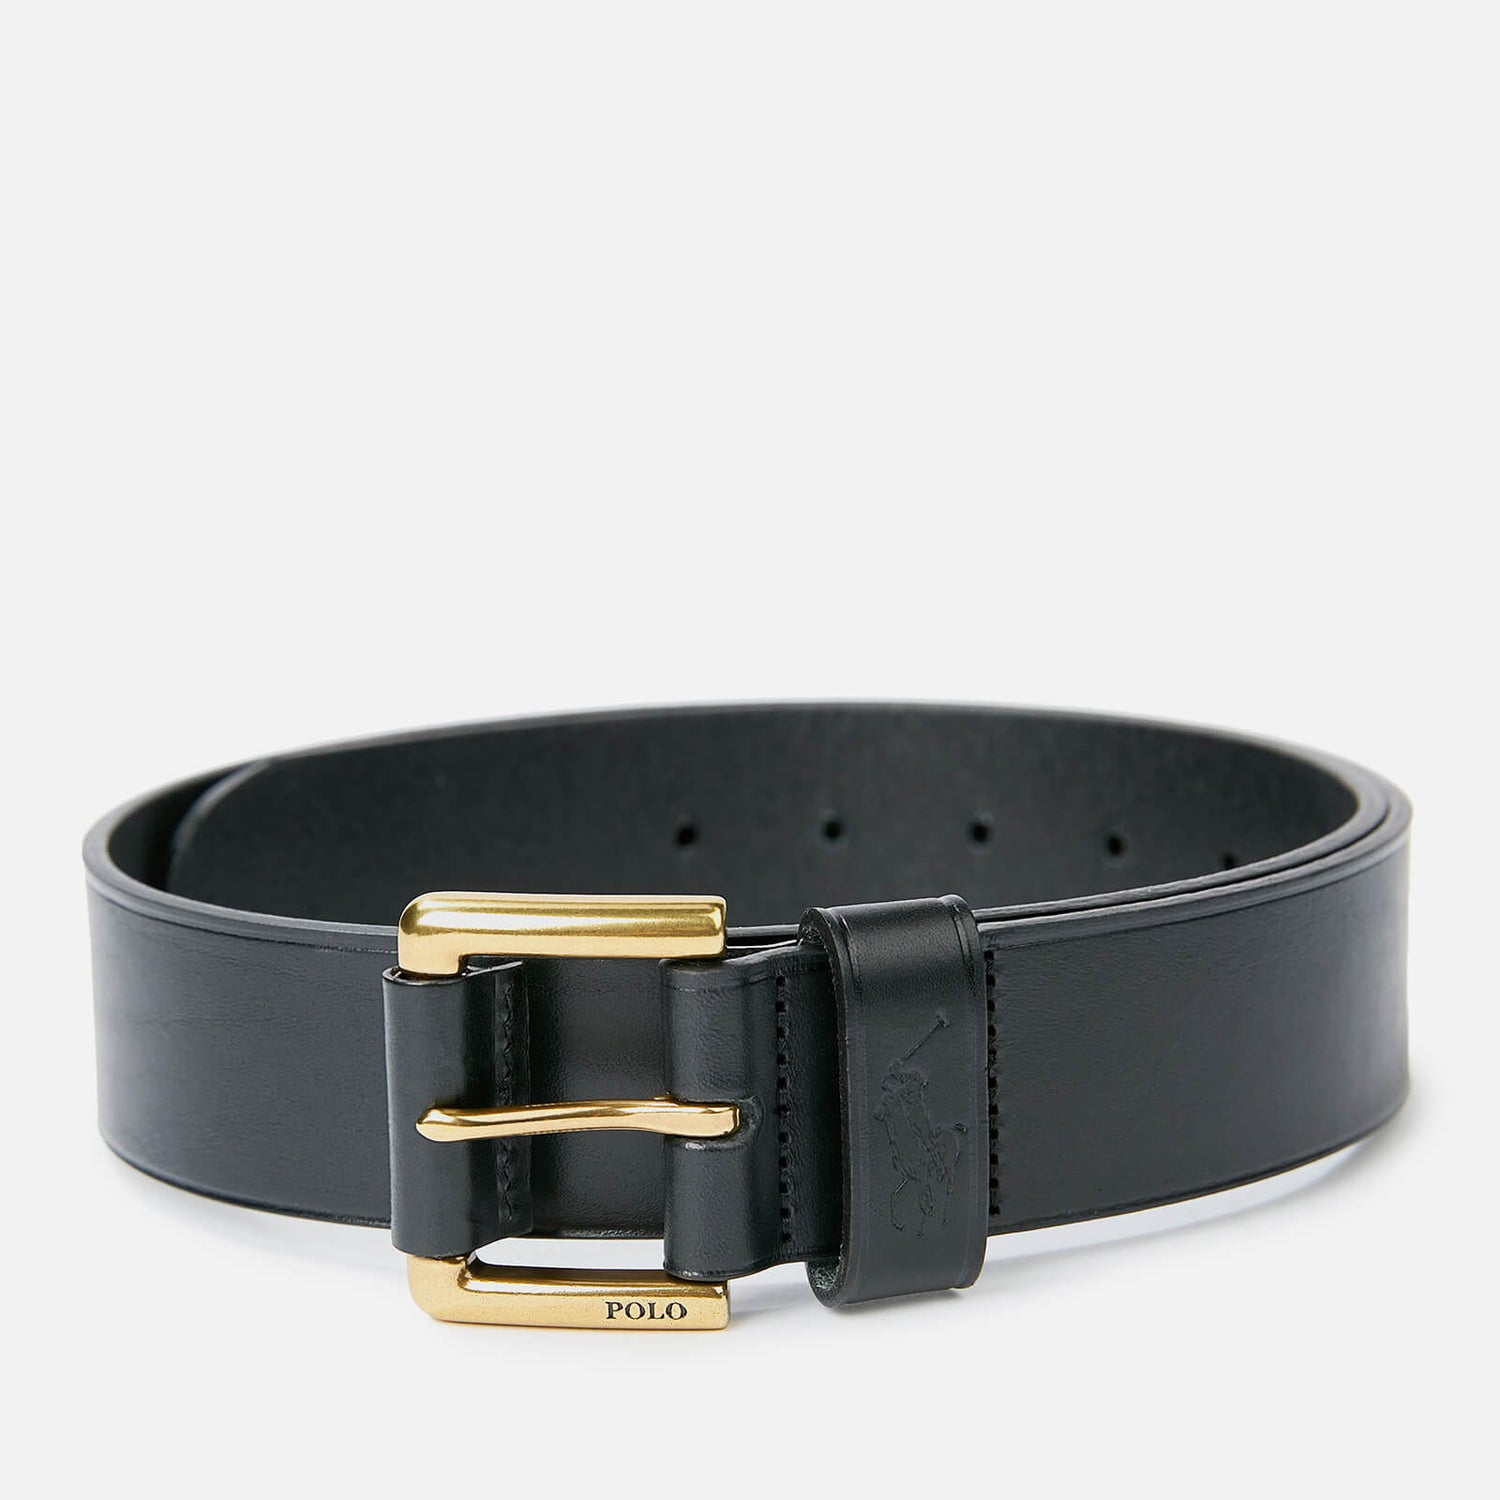 Polo Ralph Lauren Men's Leather Polo Dress Belt - Black - XL/W38